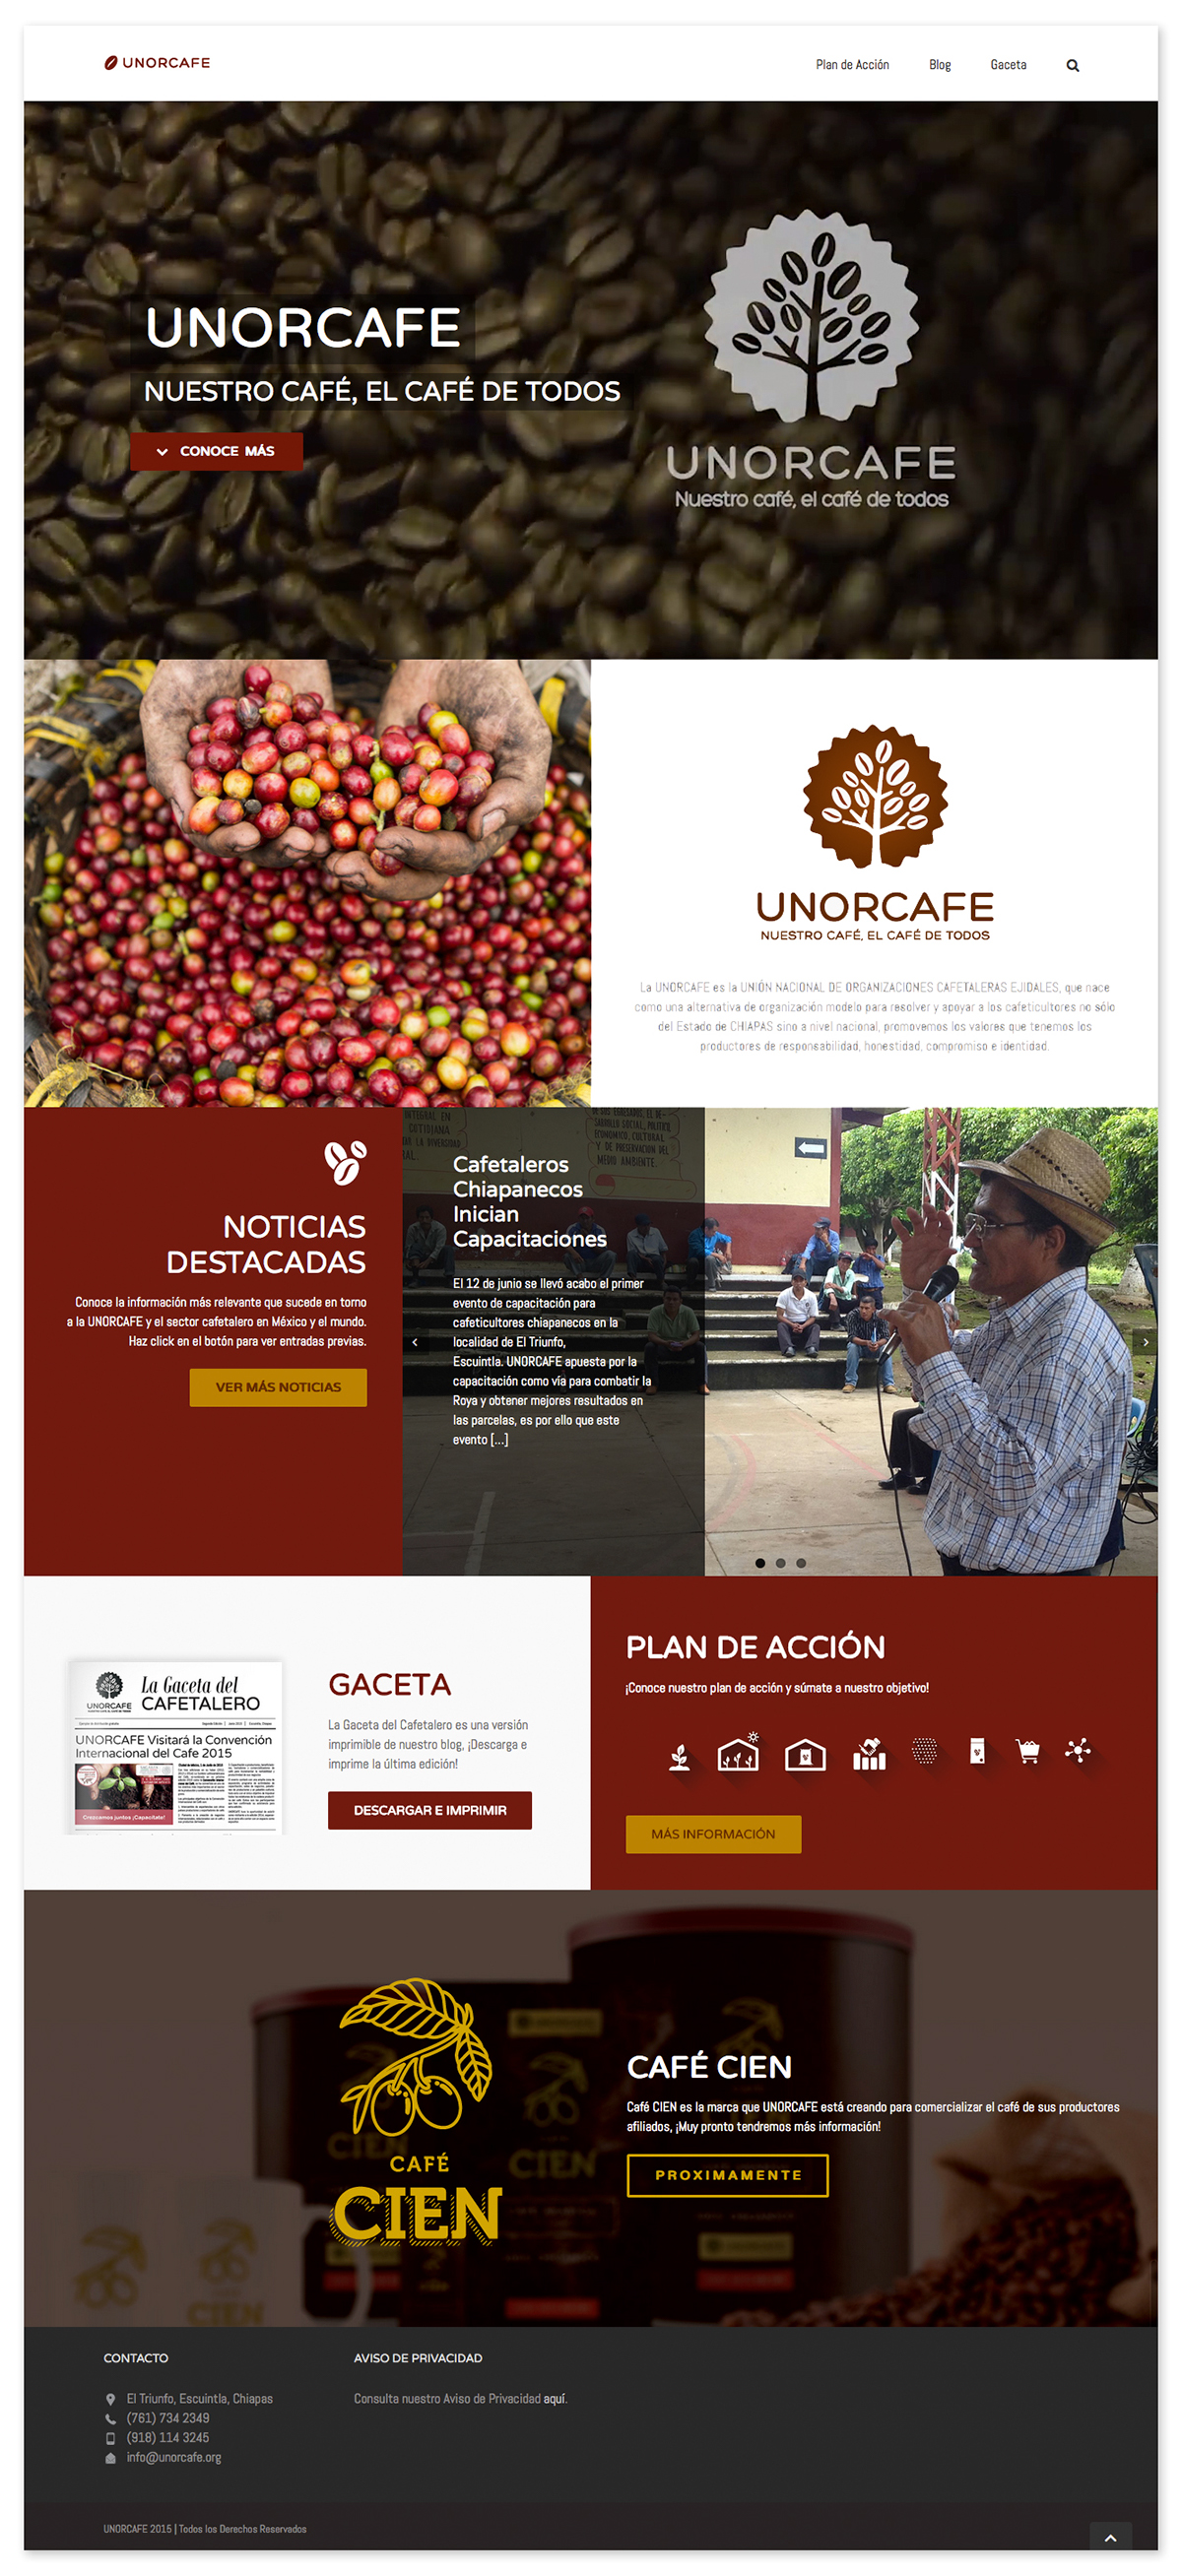 Coffee Website ong NGO cafe chiapas mexico